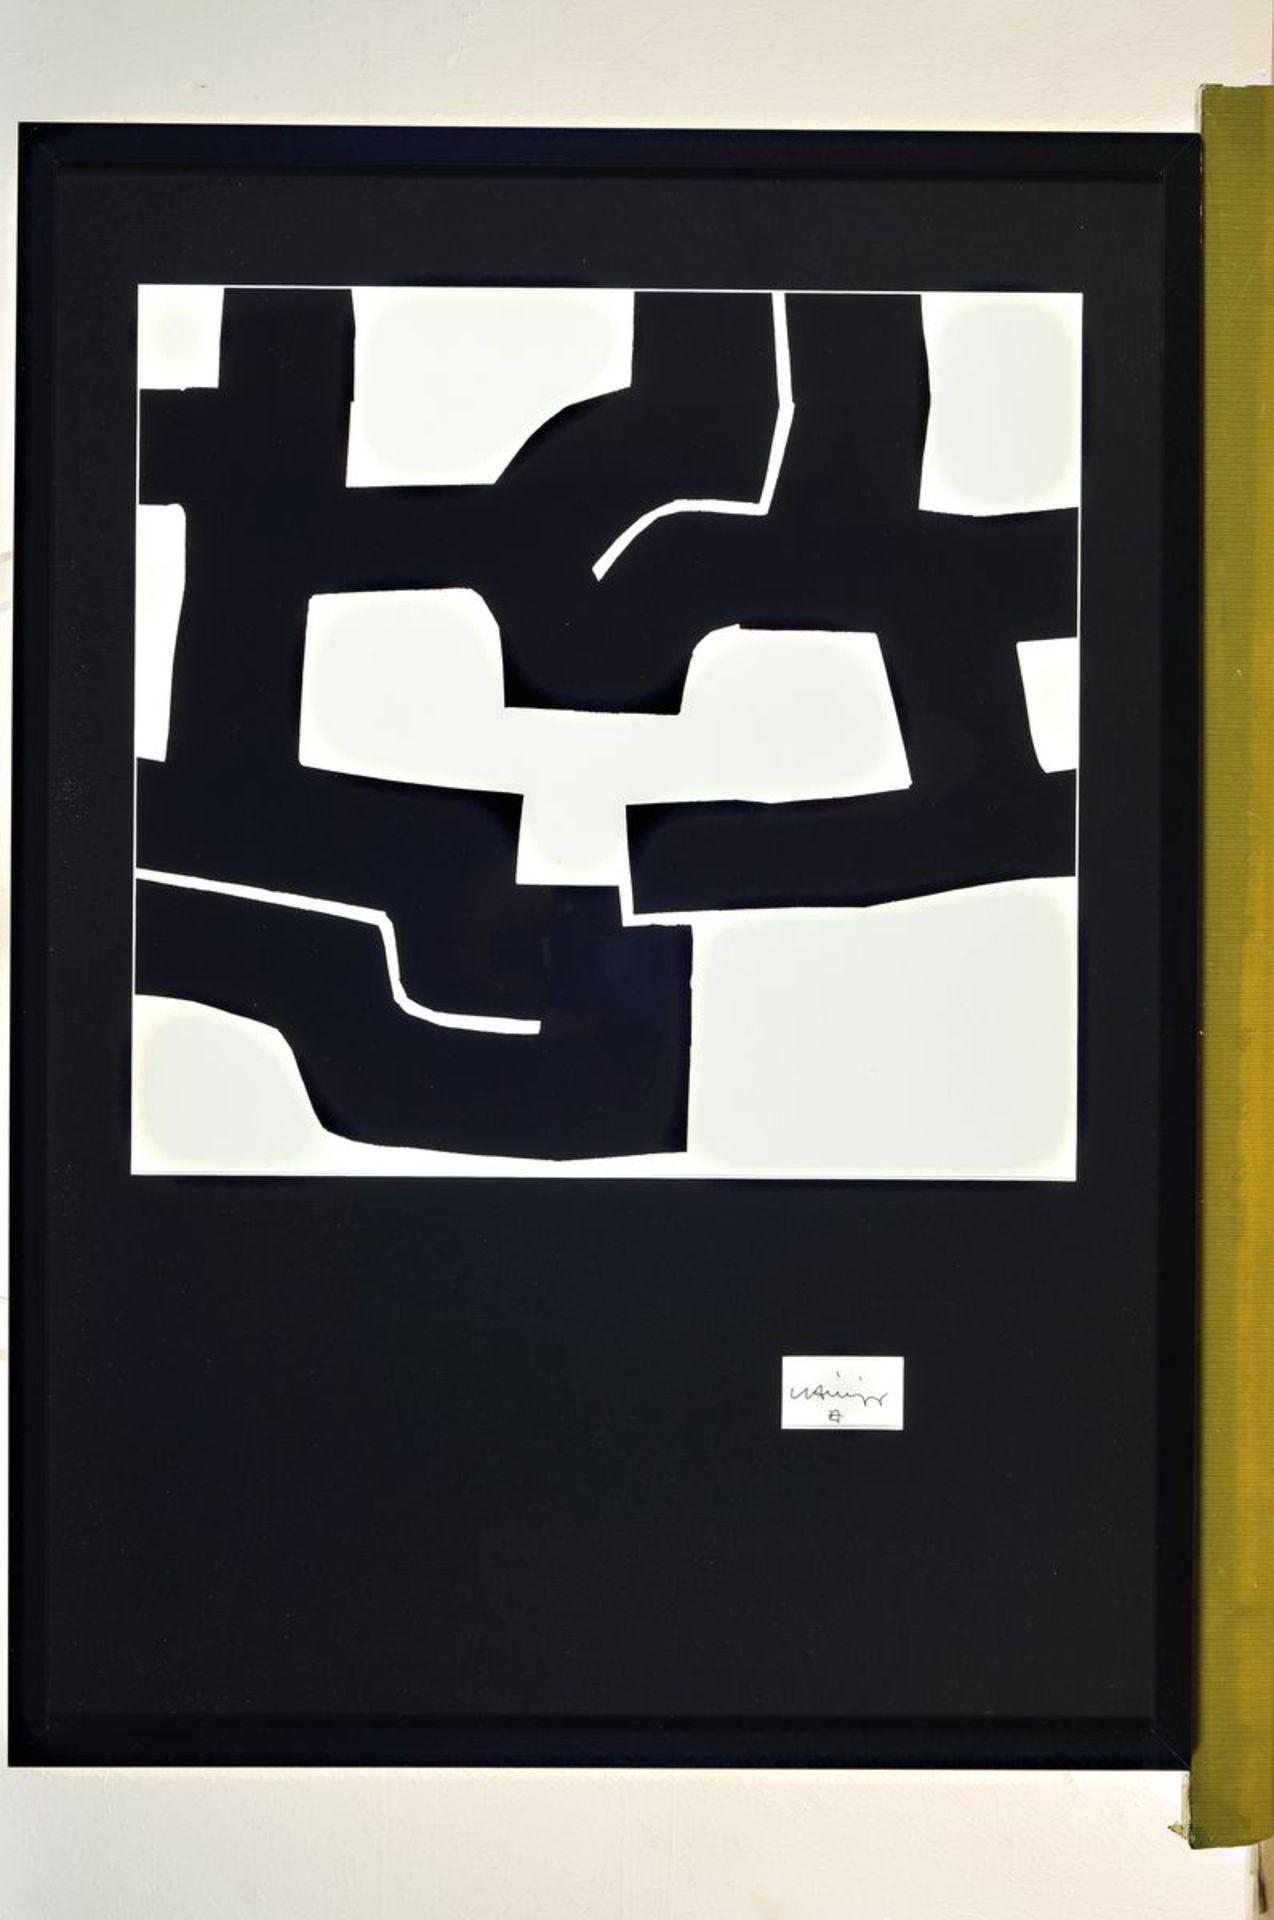 Eduardo Chillida, 1924-2002, screenprint, handsigned, sheet size 64 x 42 cm, published by Galerie - Bild 3 aus 3